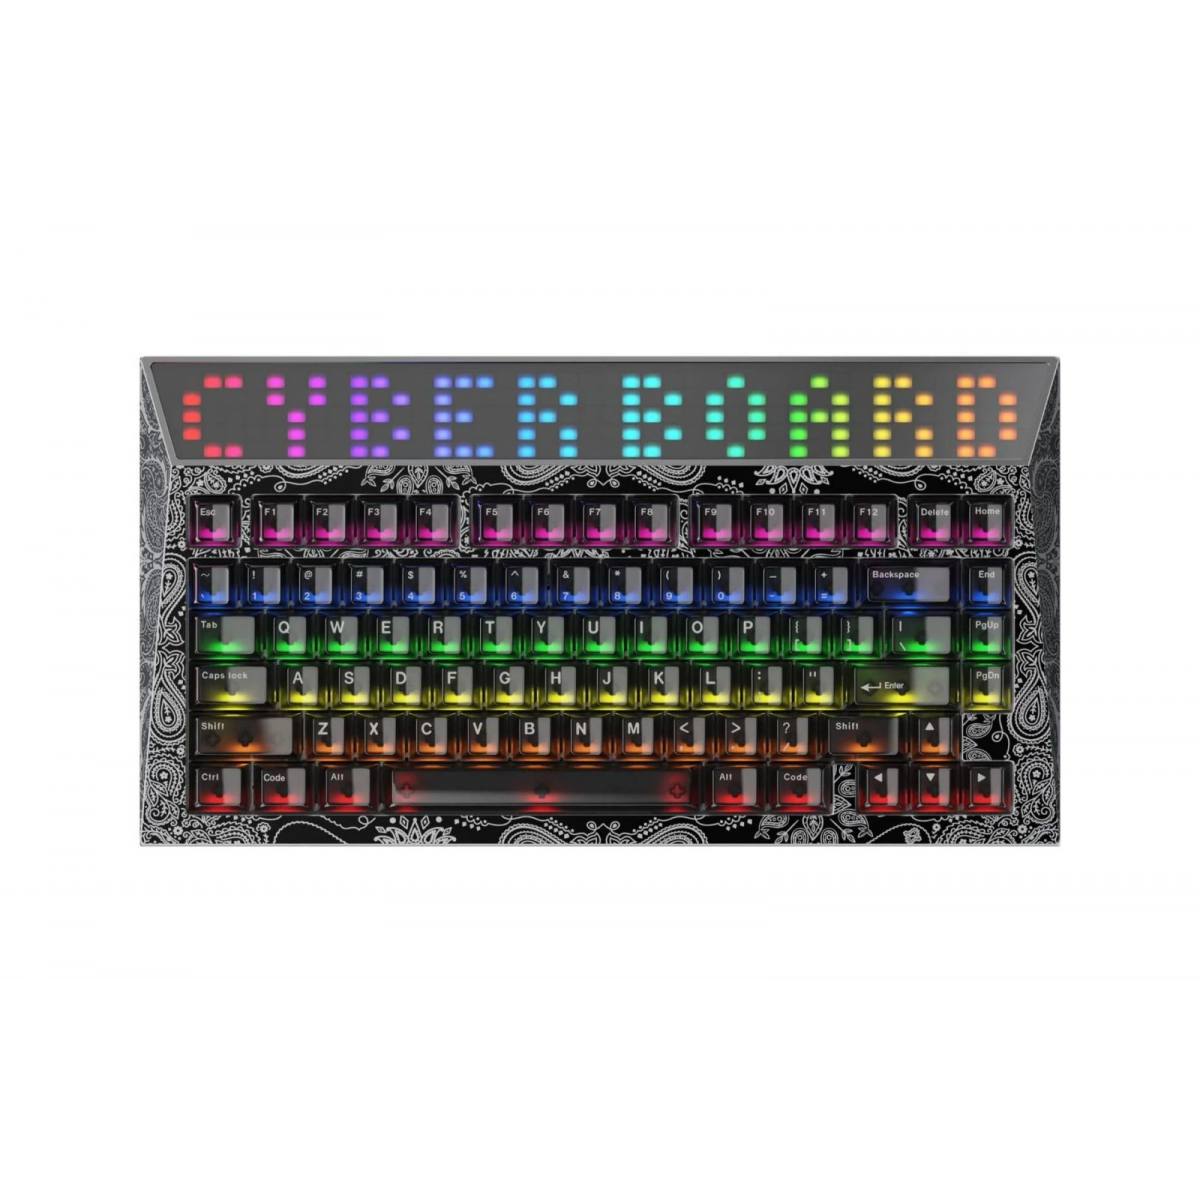 Base Kit Angry Miao Cyberboard R4 Graffiti - Paisley | Limited Edition